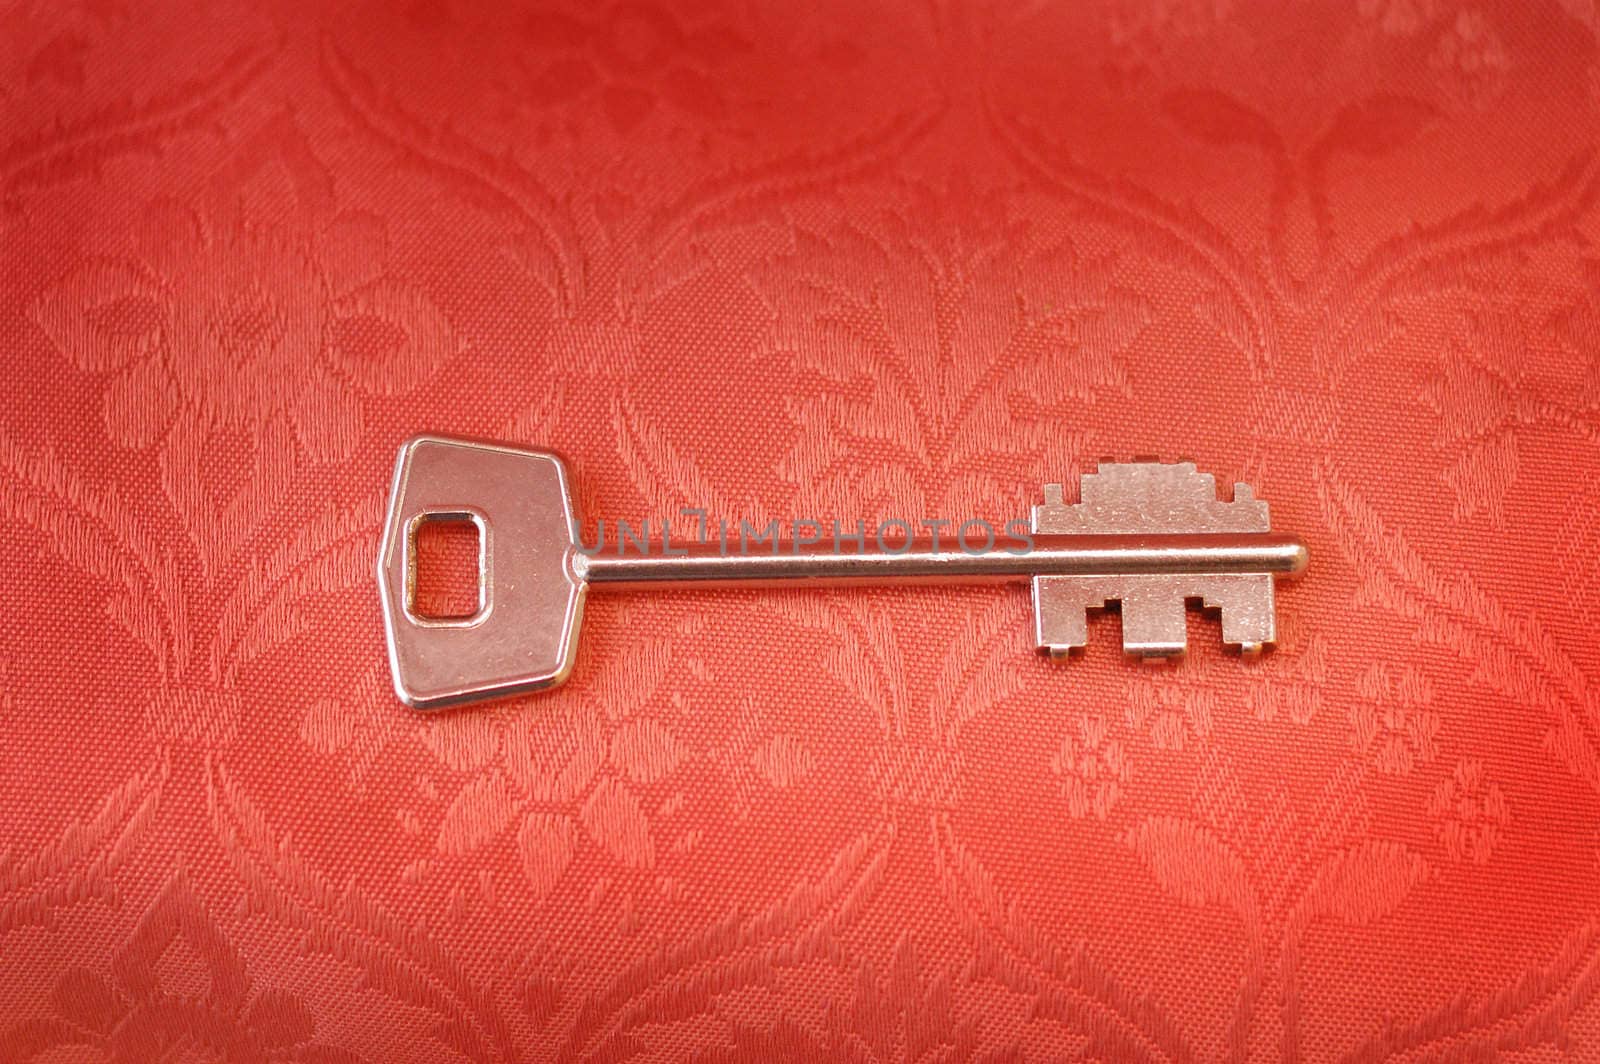 antique key on old textile background